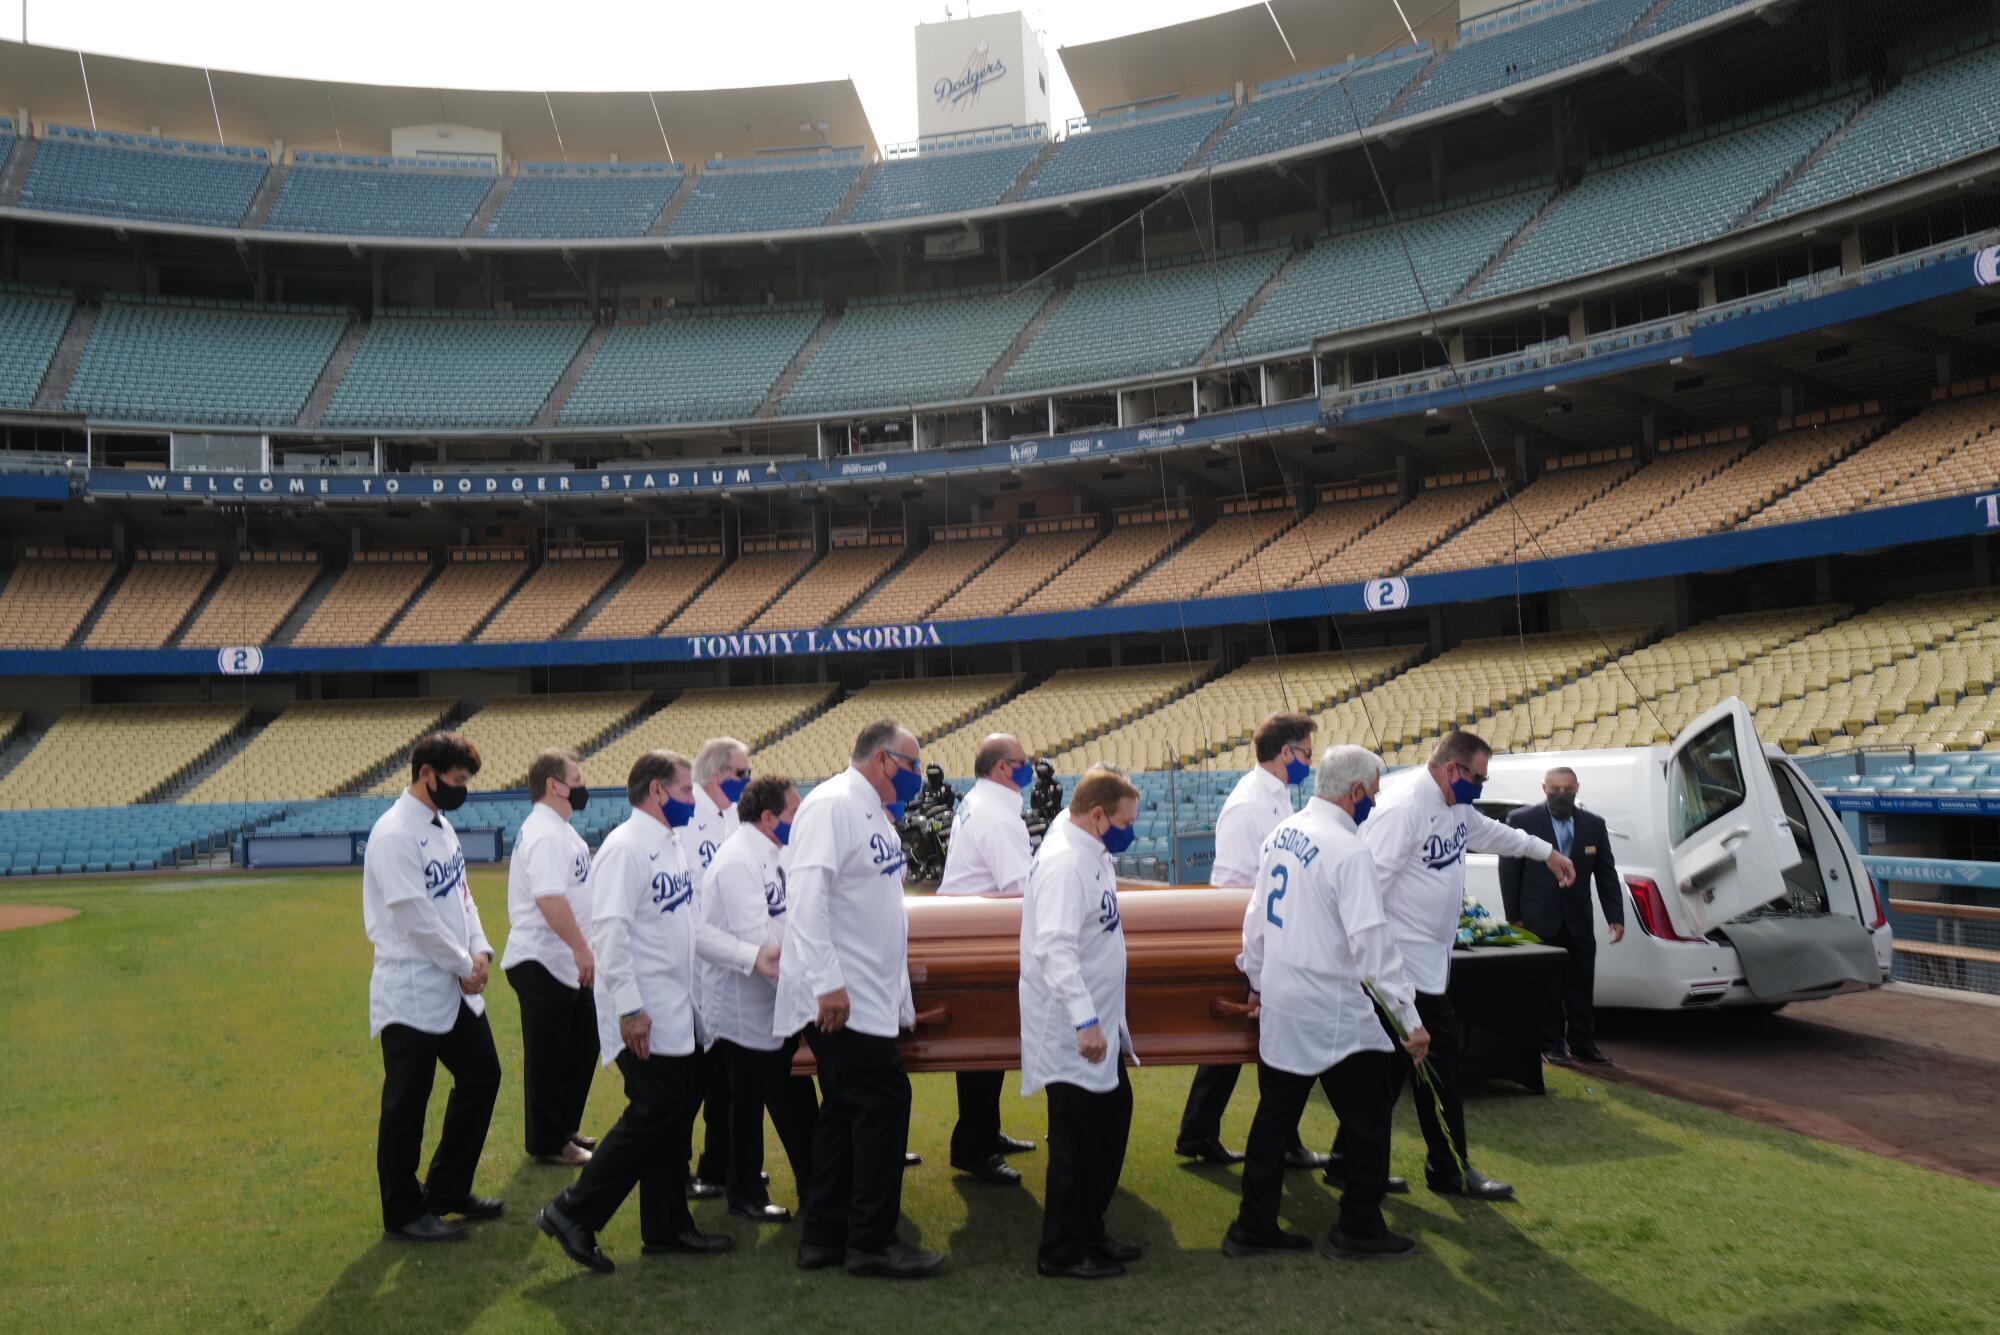 Pallbearers carry Tommy Lasaroda's casket at Dodger Stadium.